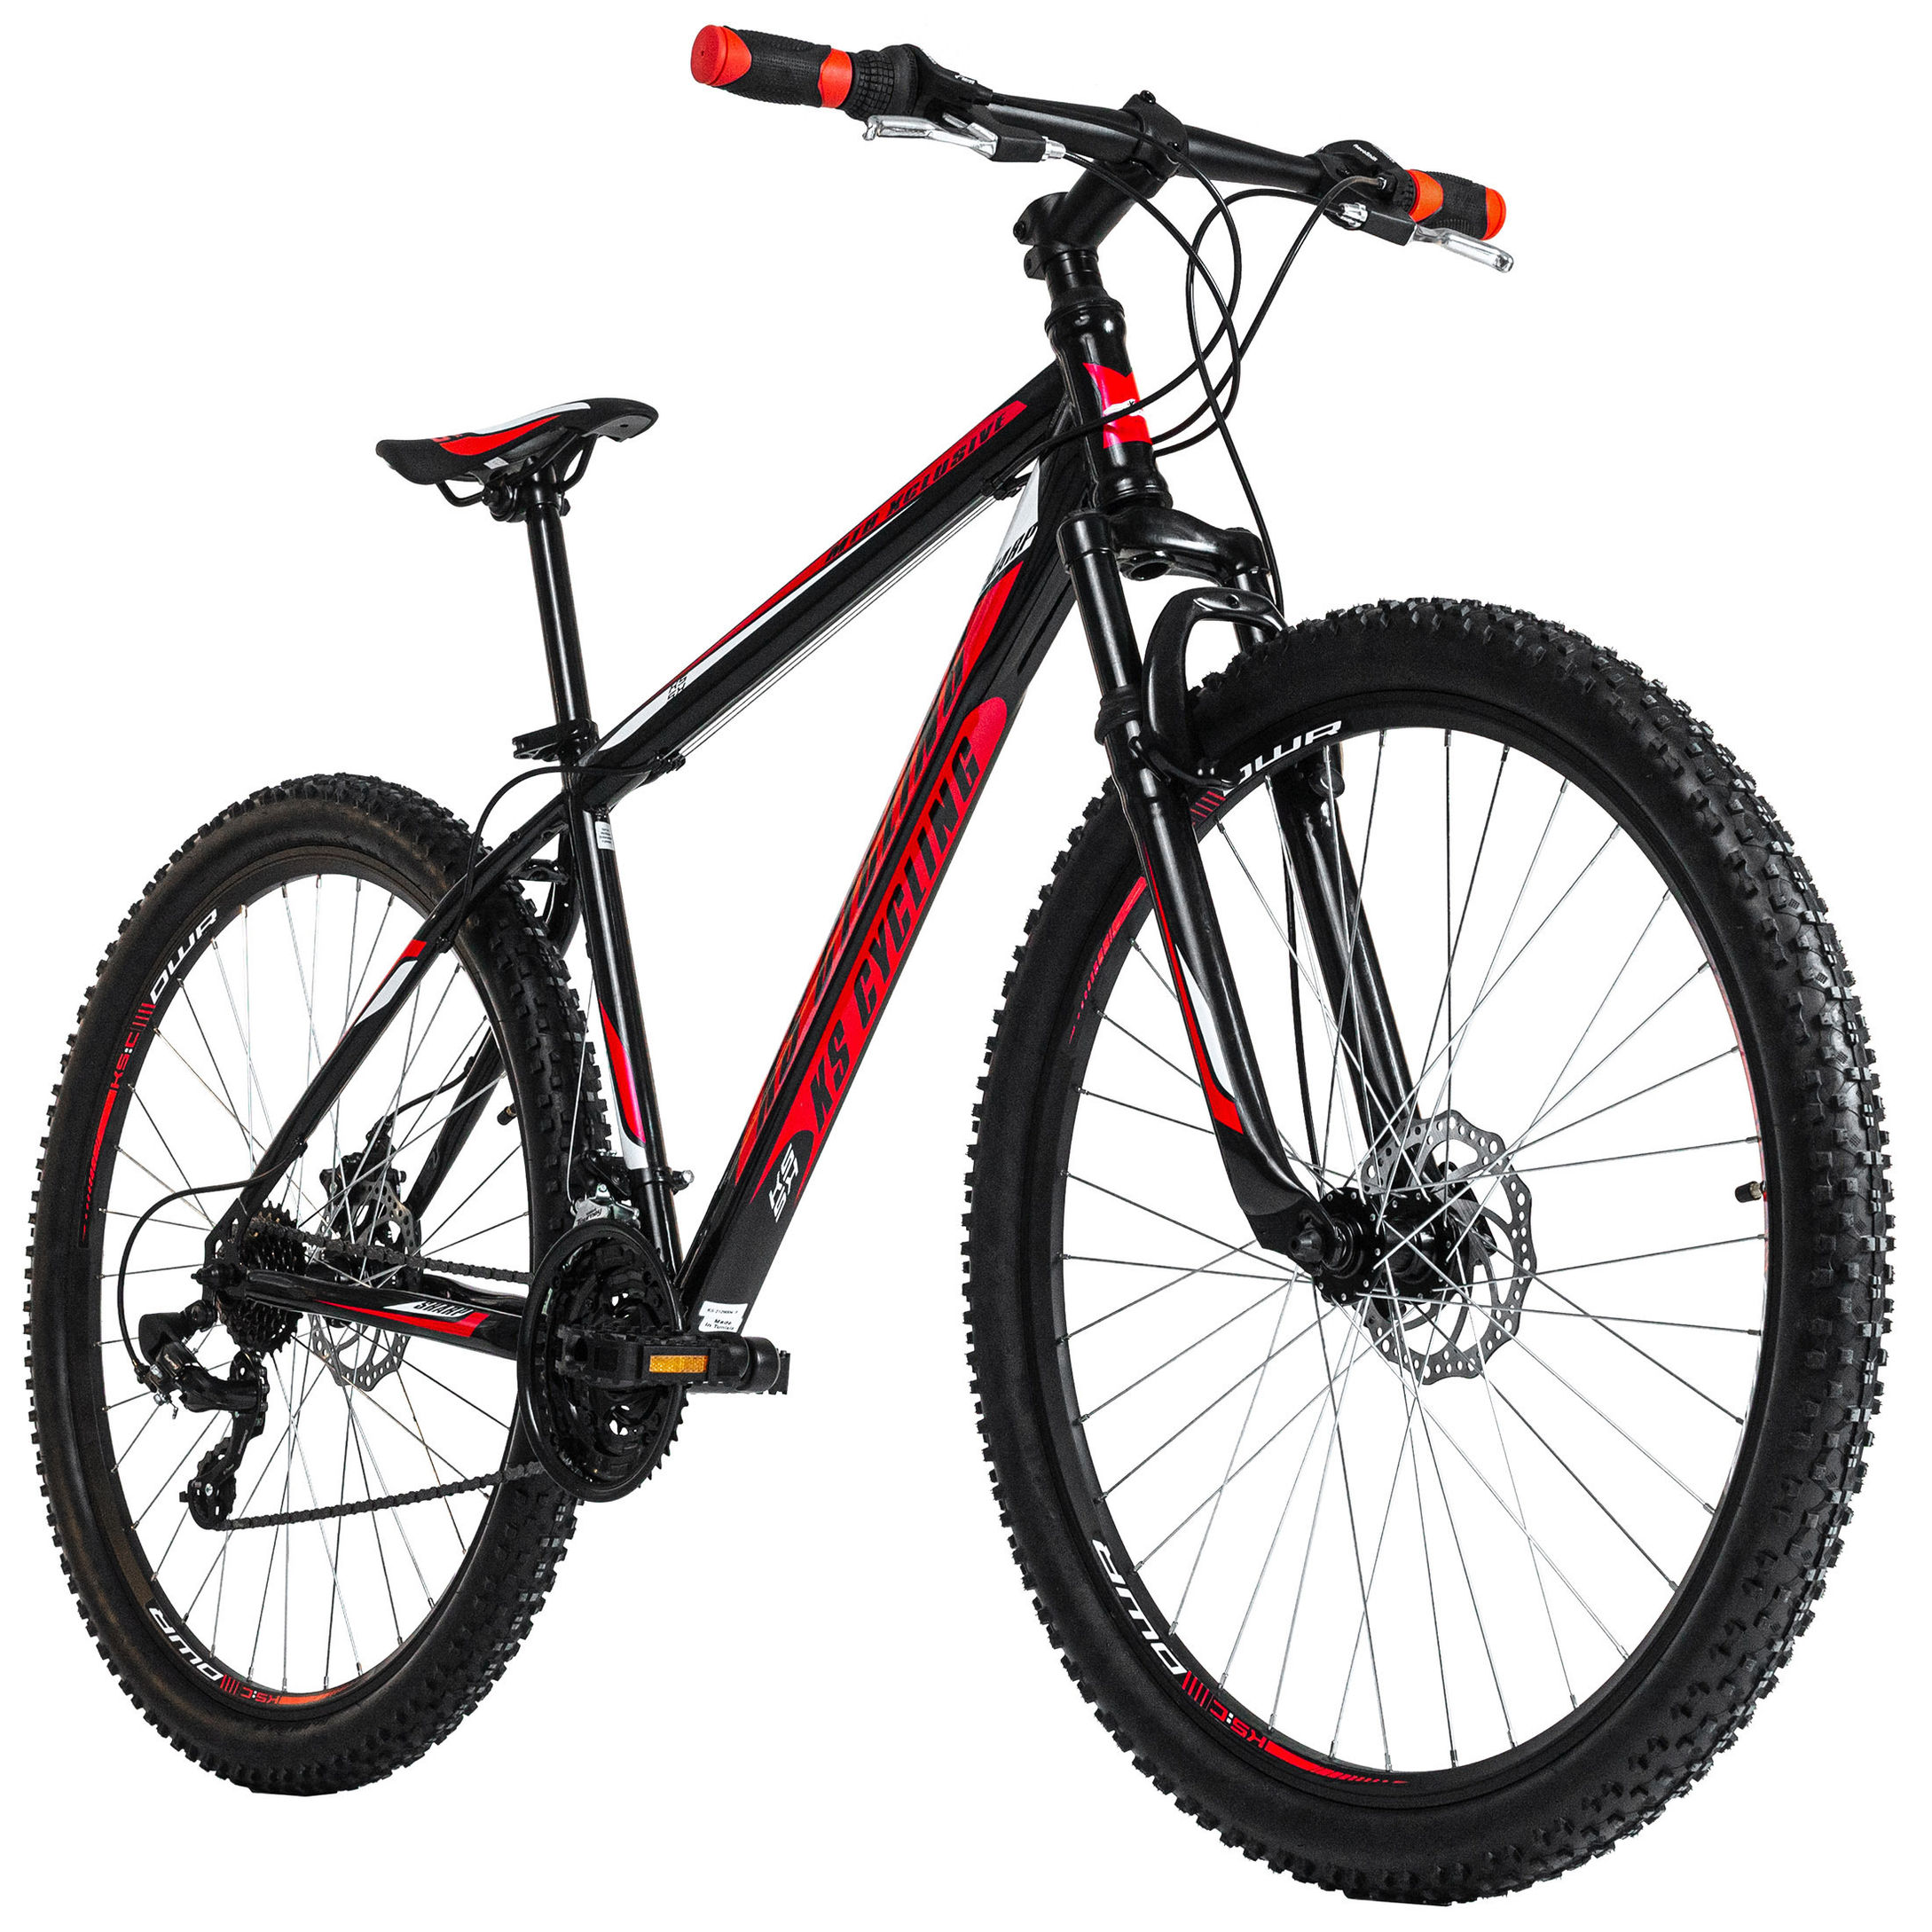 KS Cycling Mountainbike 29 Zoll Sharp schwarz-rot Größe: 46 cm | Weltbild.de